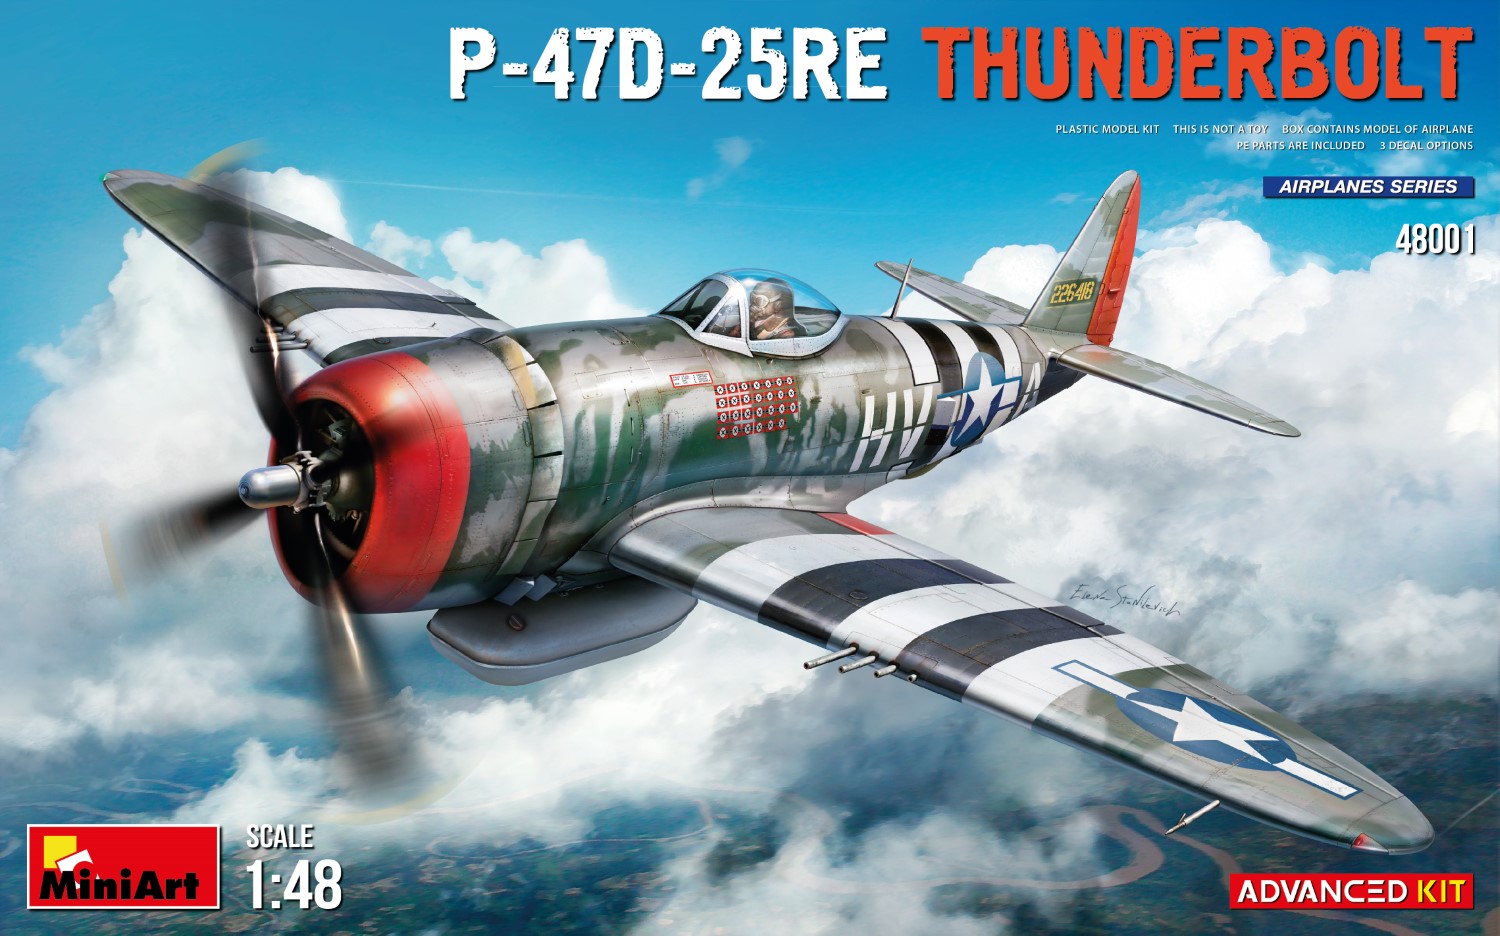 1/48 P-47D-25RE Thunderbolt. Advanced kit